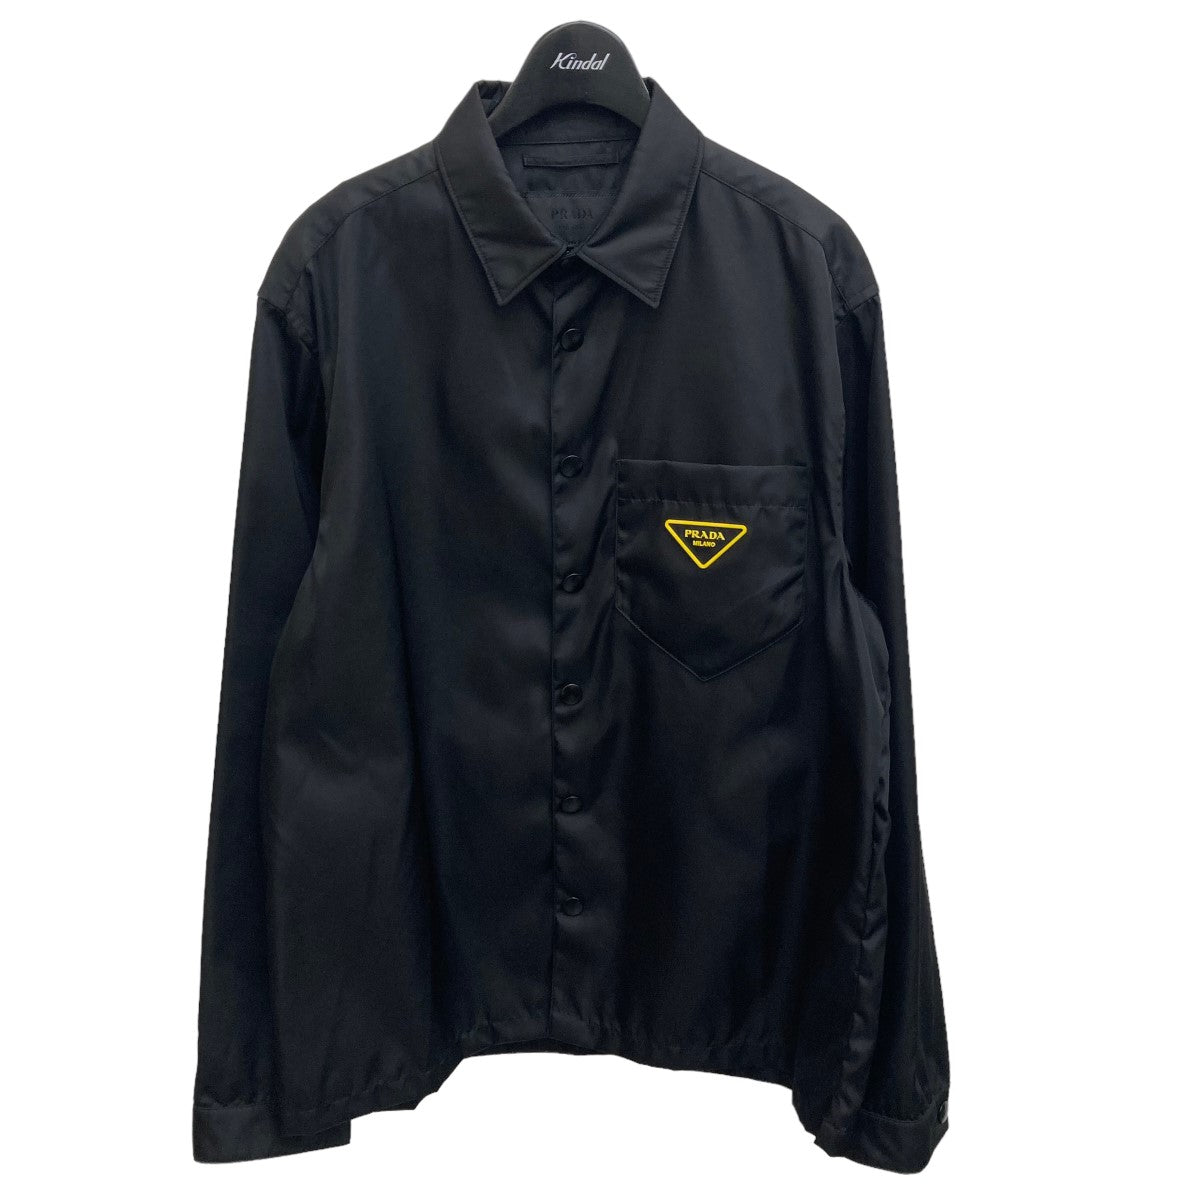 PRADA(プラダ) Re-Nylon Shirt シャツ SC520 S201 ブラック サイズ M｜【公式】カインドオルオンライン  ブランド古着・中古通販【kindal】